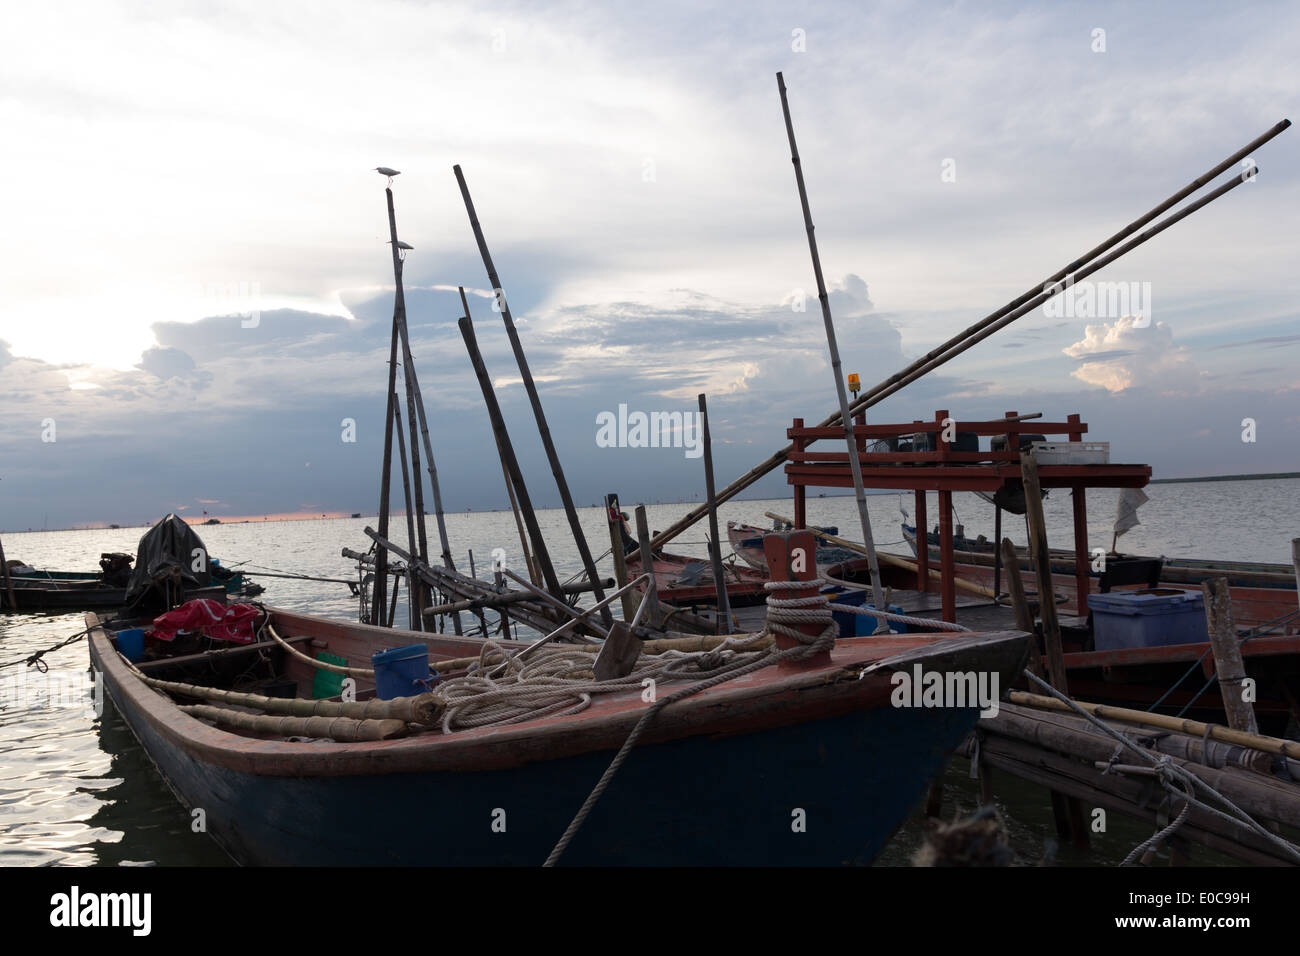 Bateau de pêche dans la mer, Thaïlande Banque D'Images